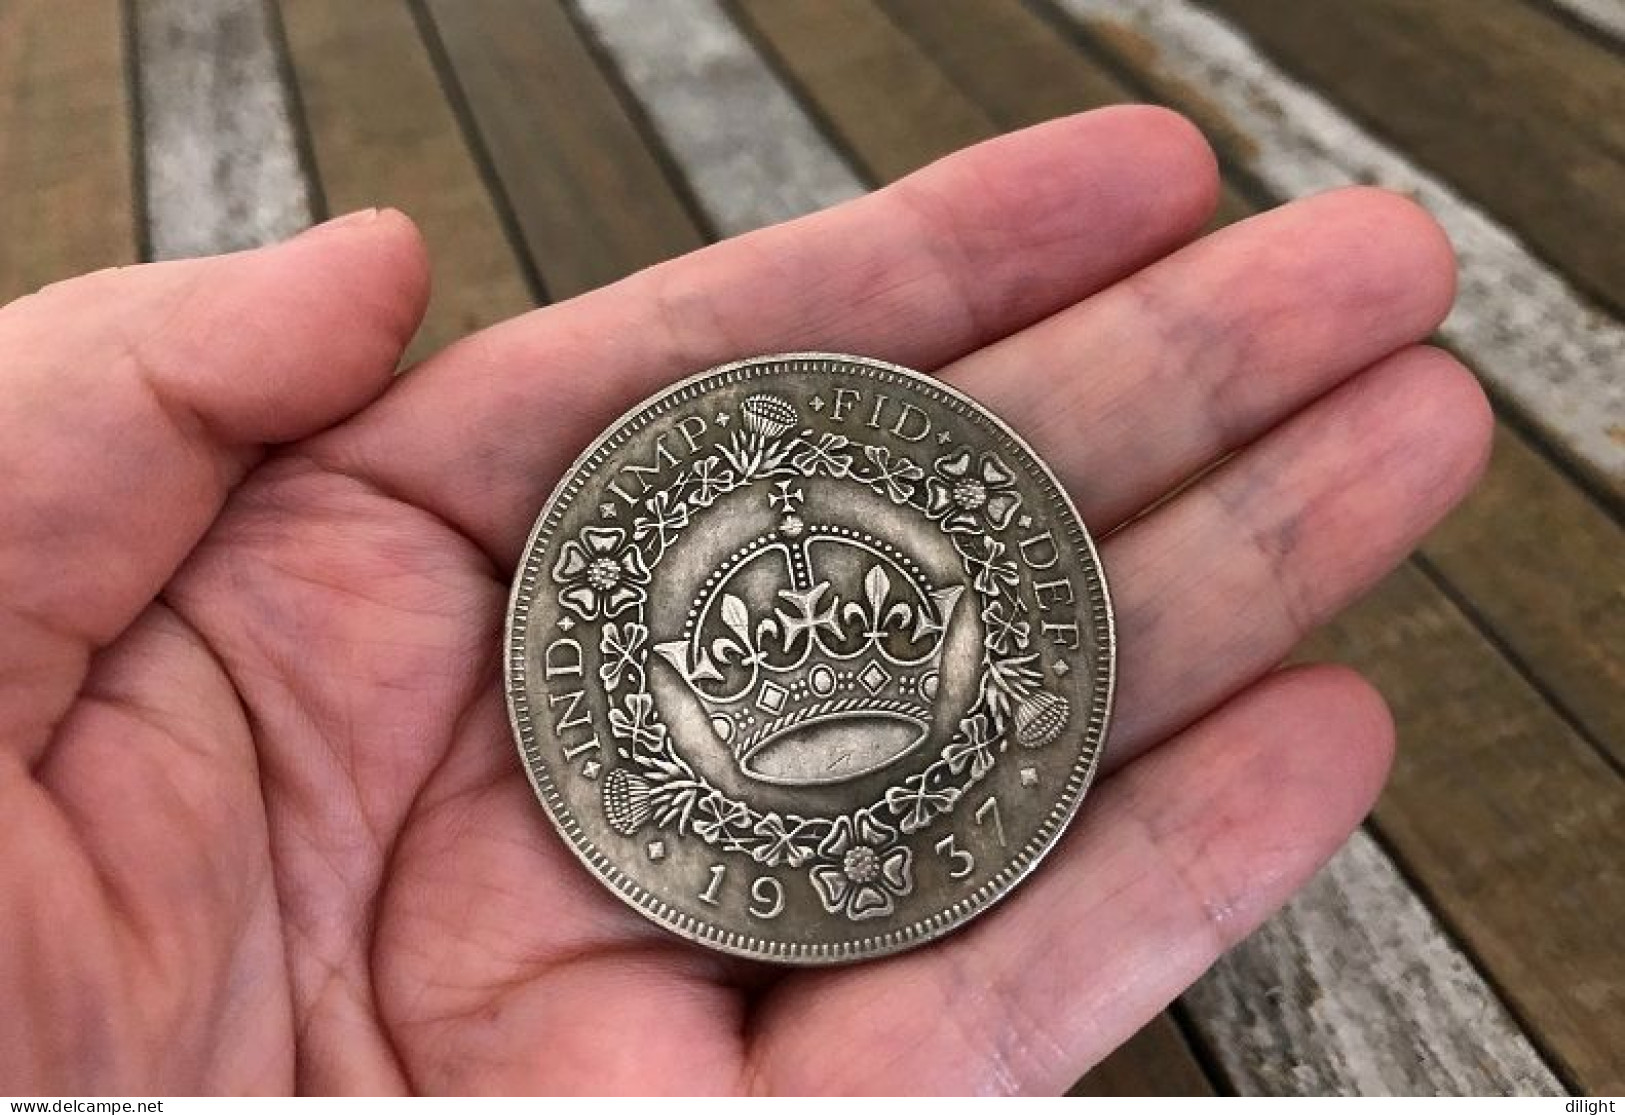 Coin 1937 King Edward VIII Of England (Wallis Simpson) =replica= FREE SHIPPING - Comercio Exterior, Ensayos, Contramarcas Y Acuñaciones